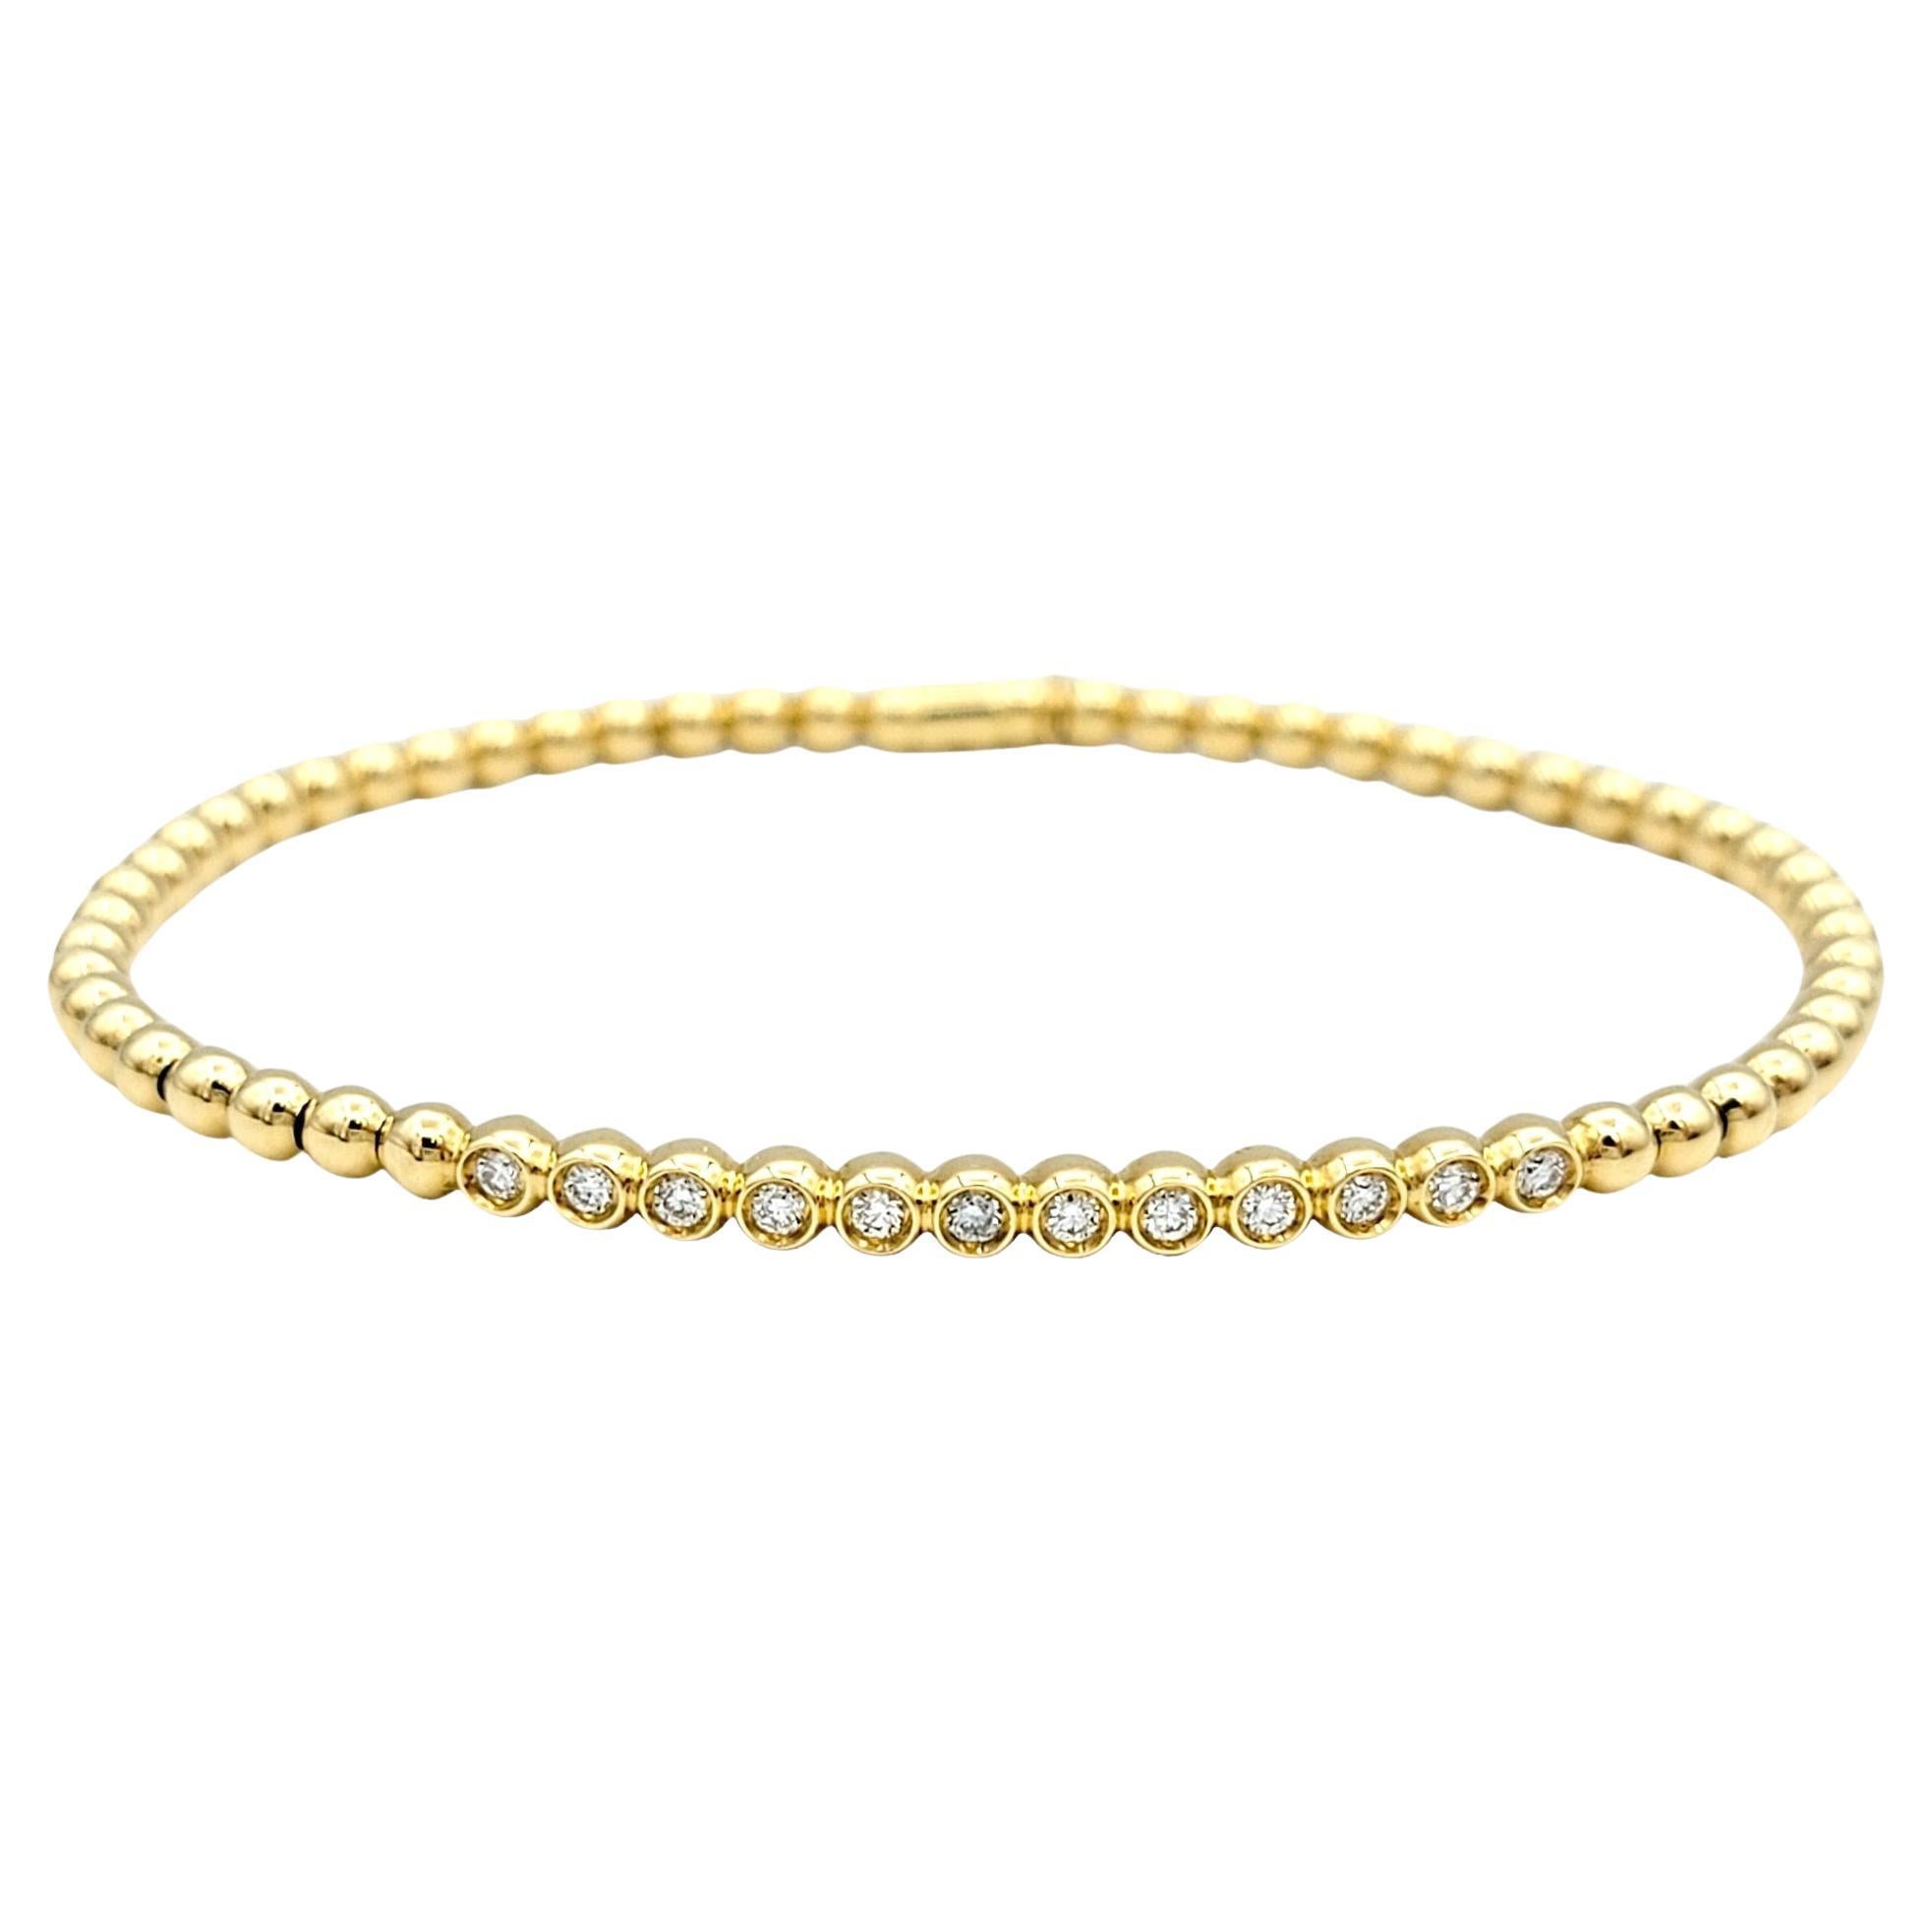 Hulchi Belluni Tresore Collection, bracelet extensible de 3 mm en or jaune et diamants